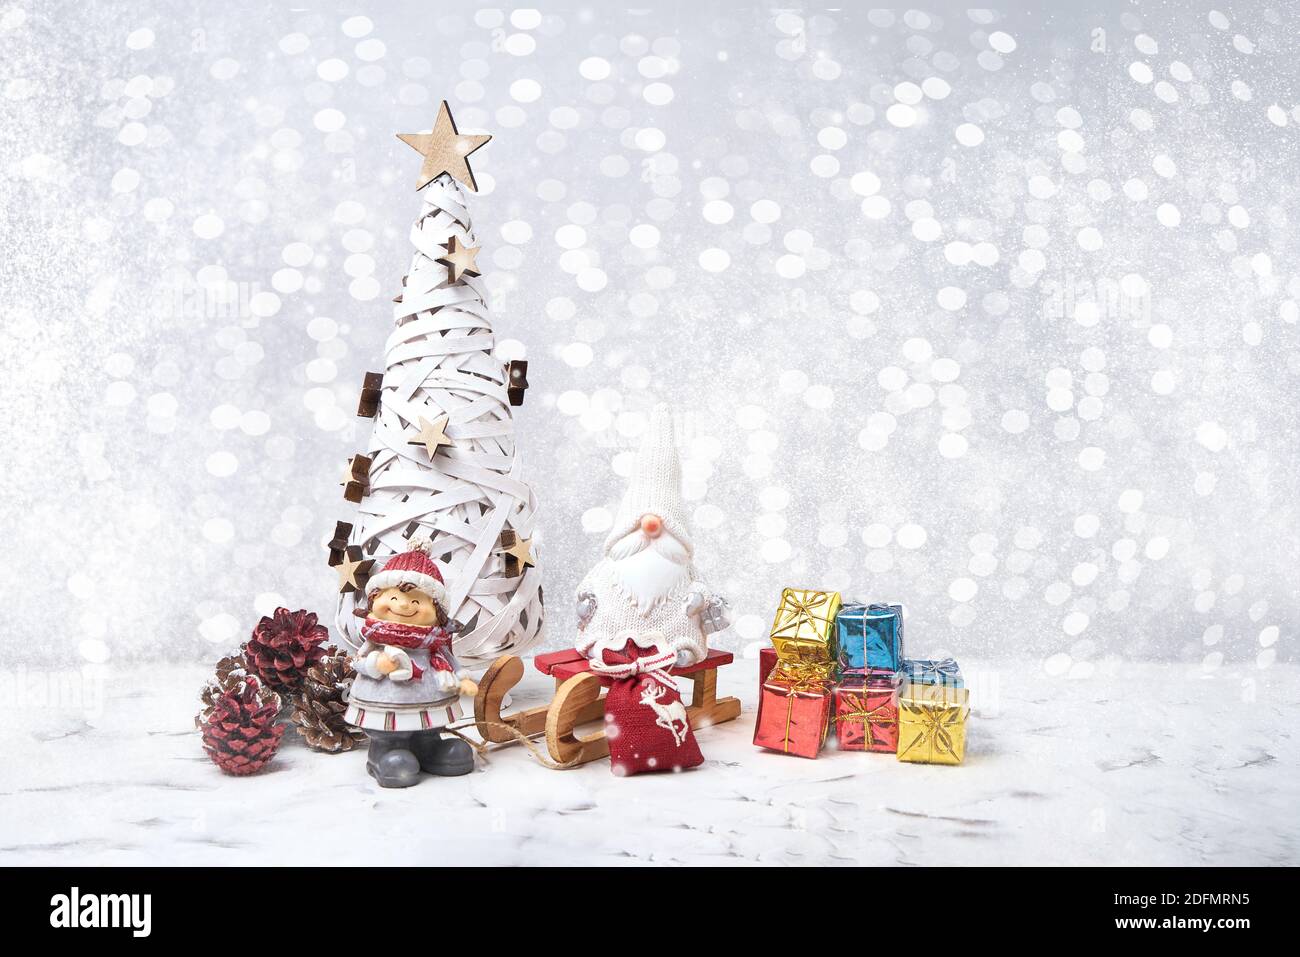 Carte de vœux de Noël. Arbre de Noël, nains de Noël, petits cadeaux, texture neige. Symbole de Noël. Banque D'Images